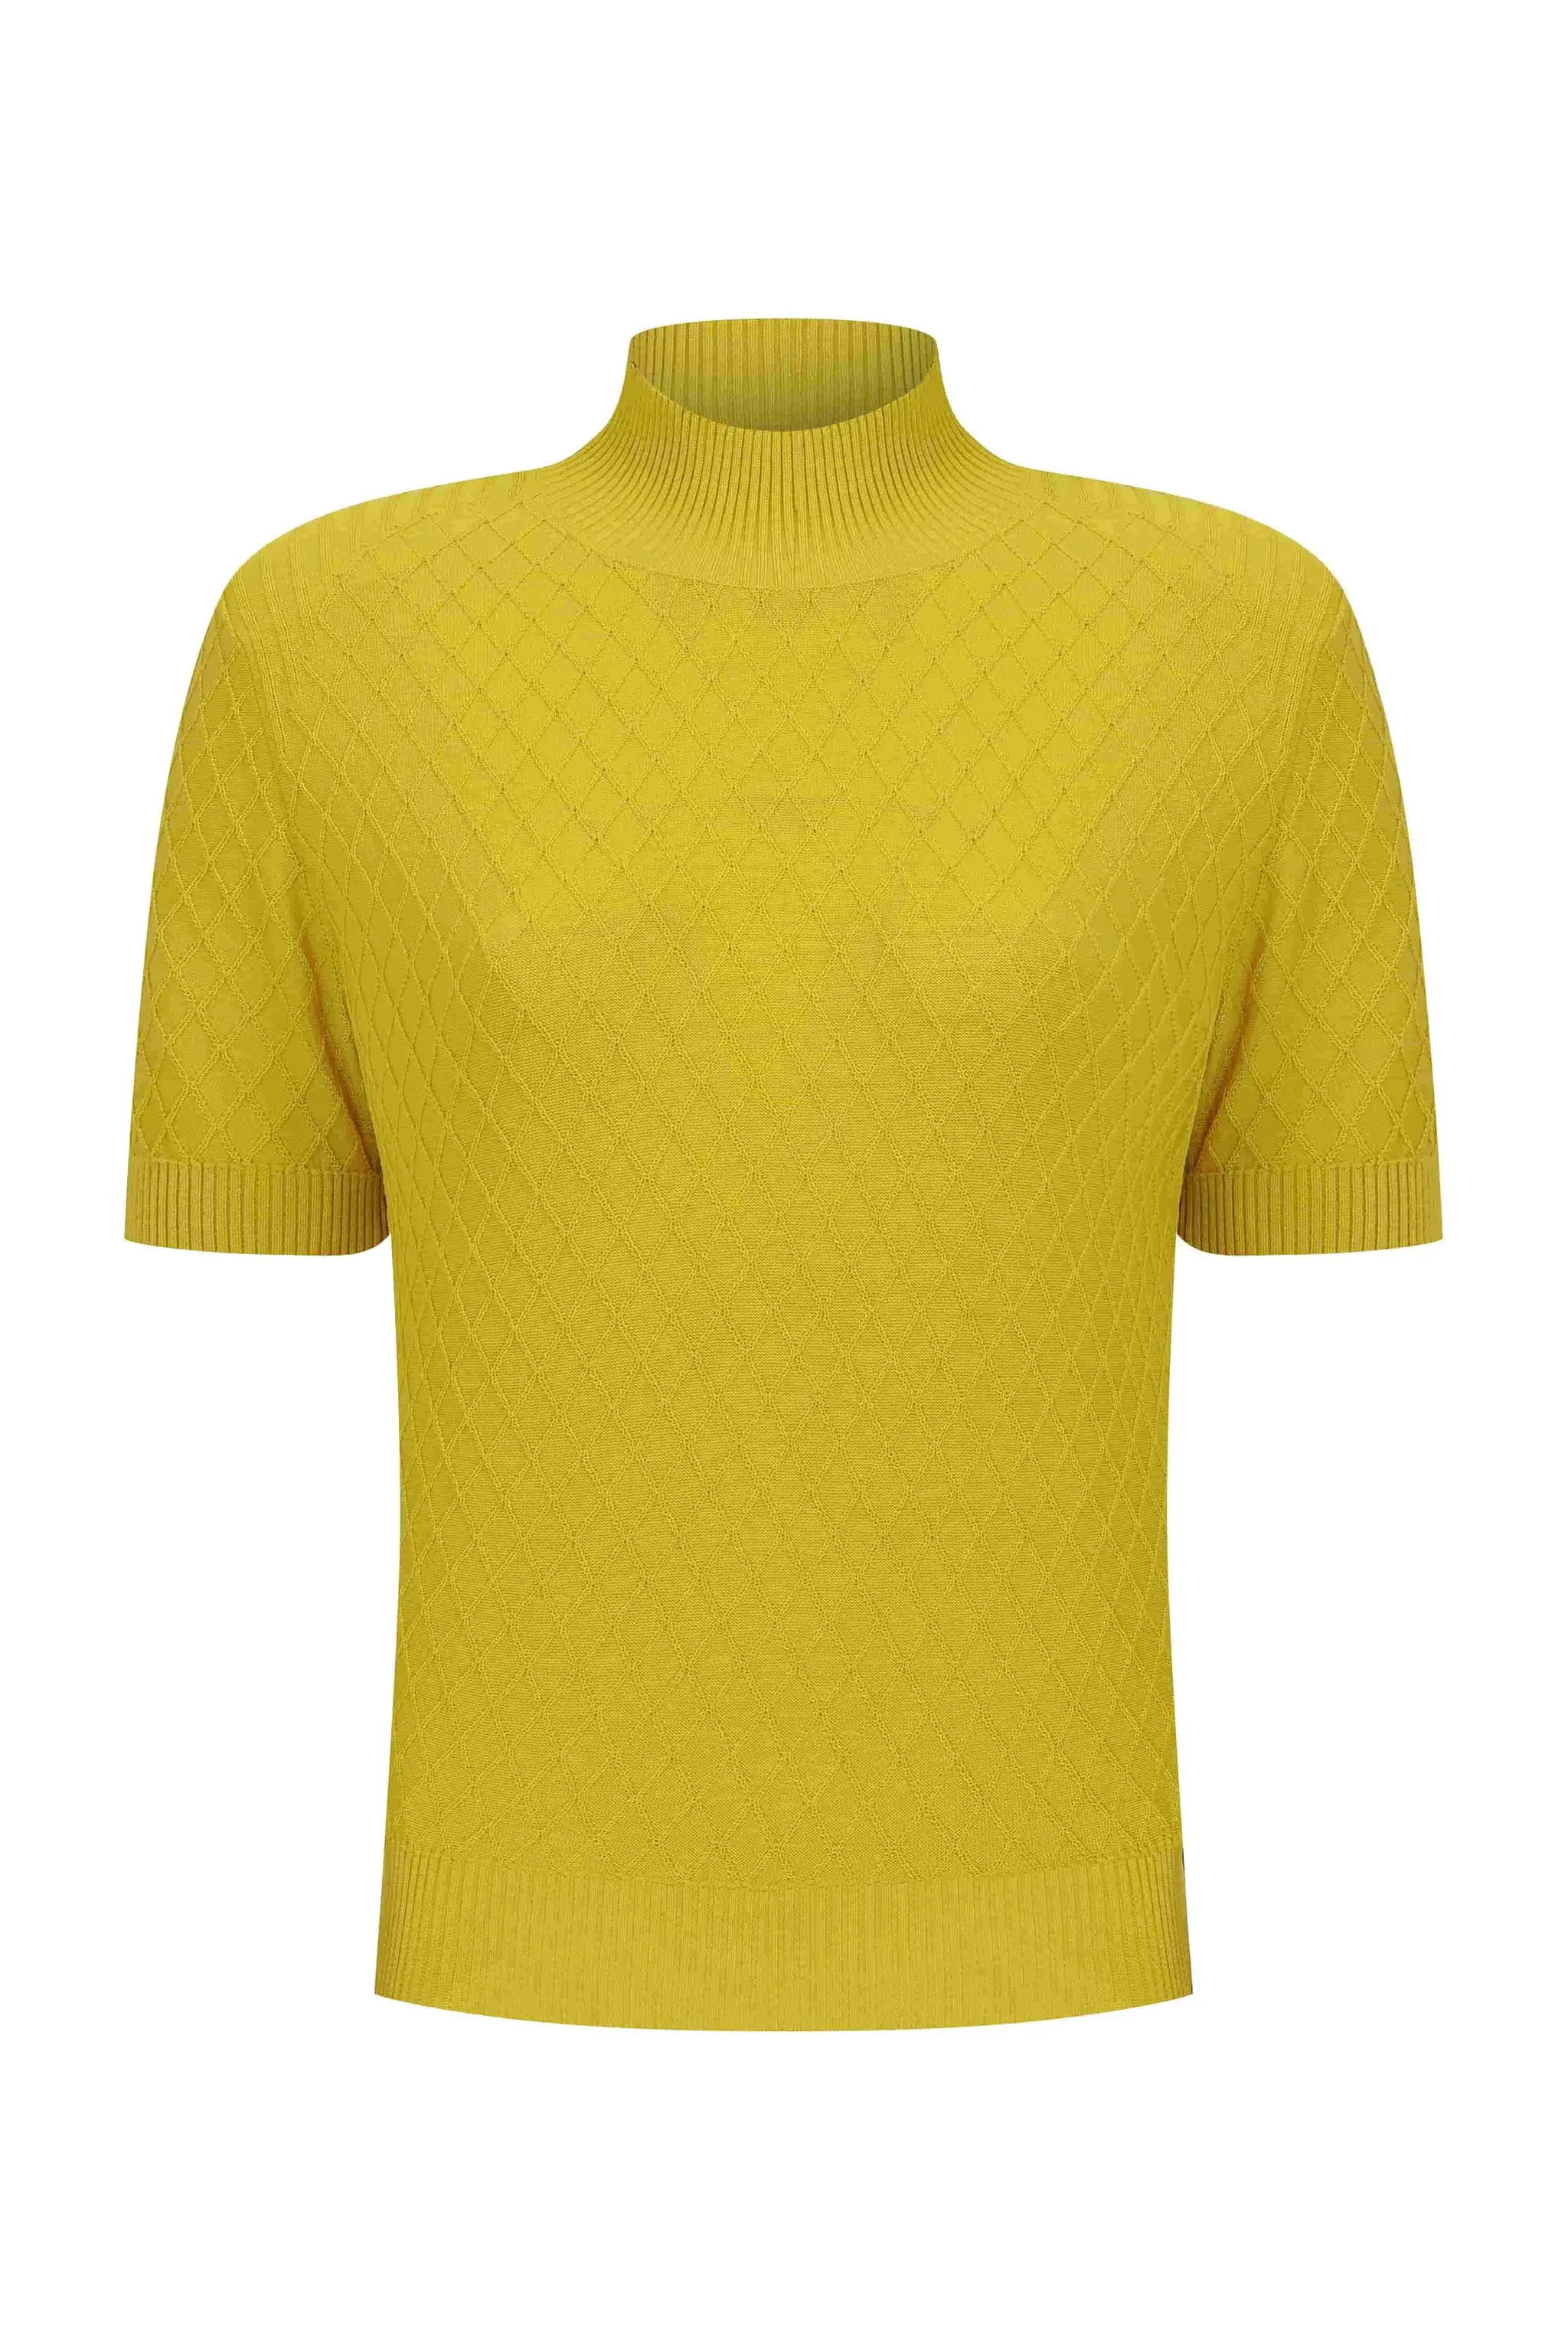 Roman Yellow Turtleneck Women's Knitwear - 1 / Yellow. 1